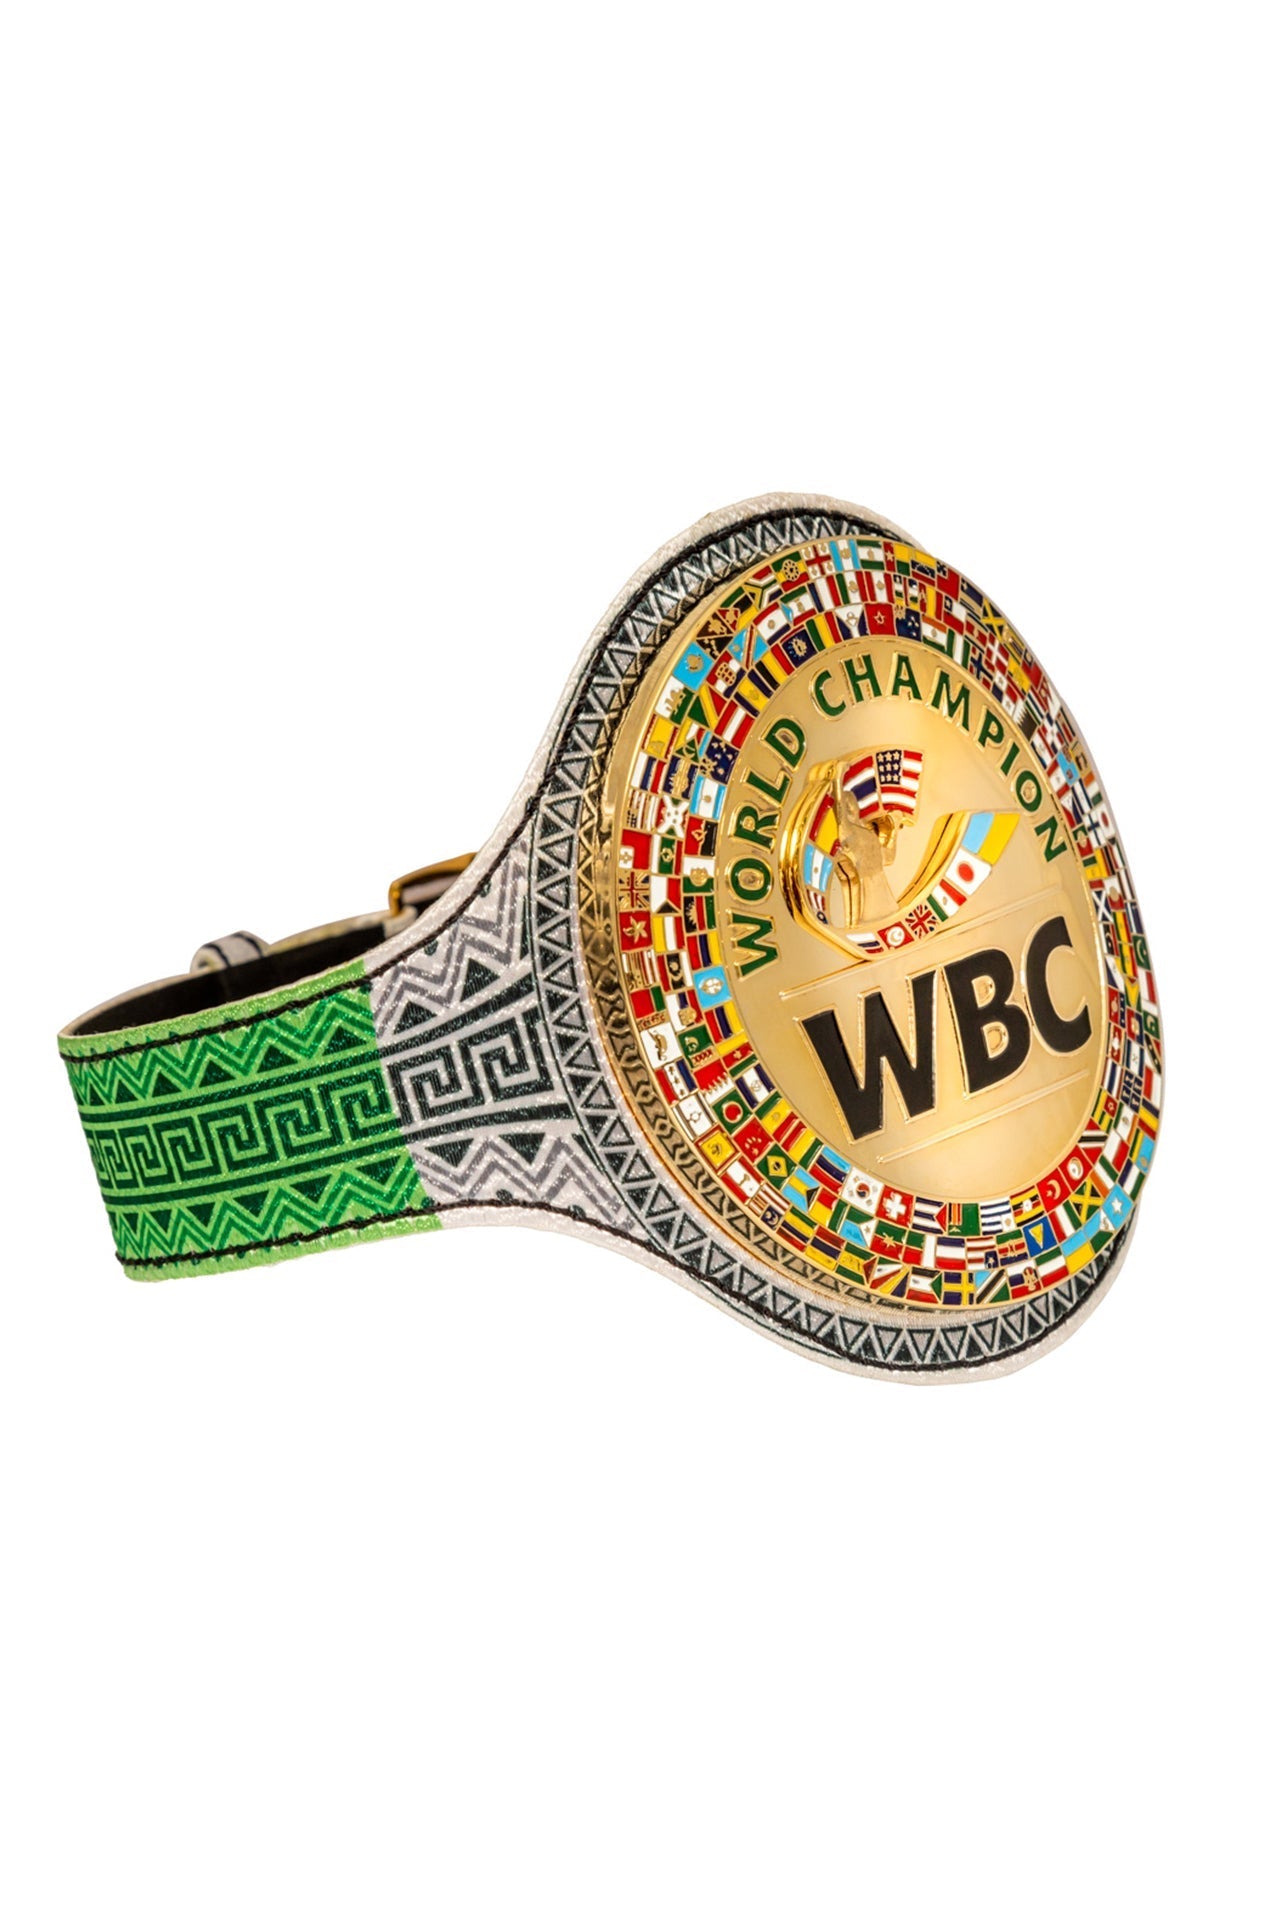 WBC Store WBC Mexico Mini Belt